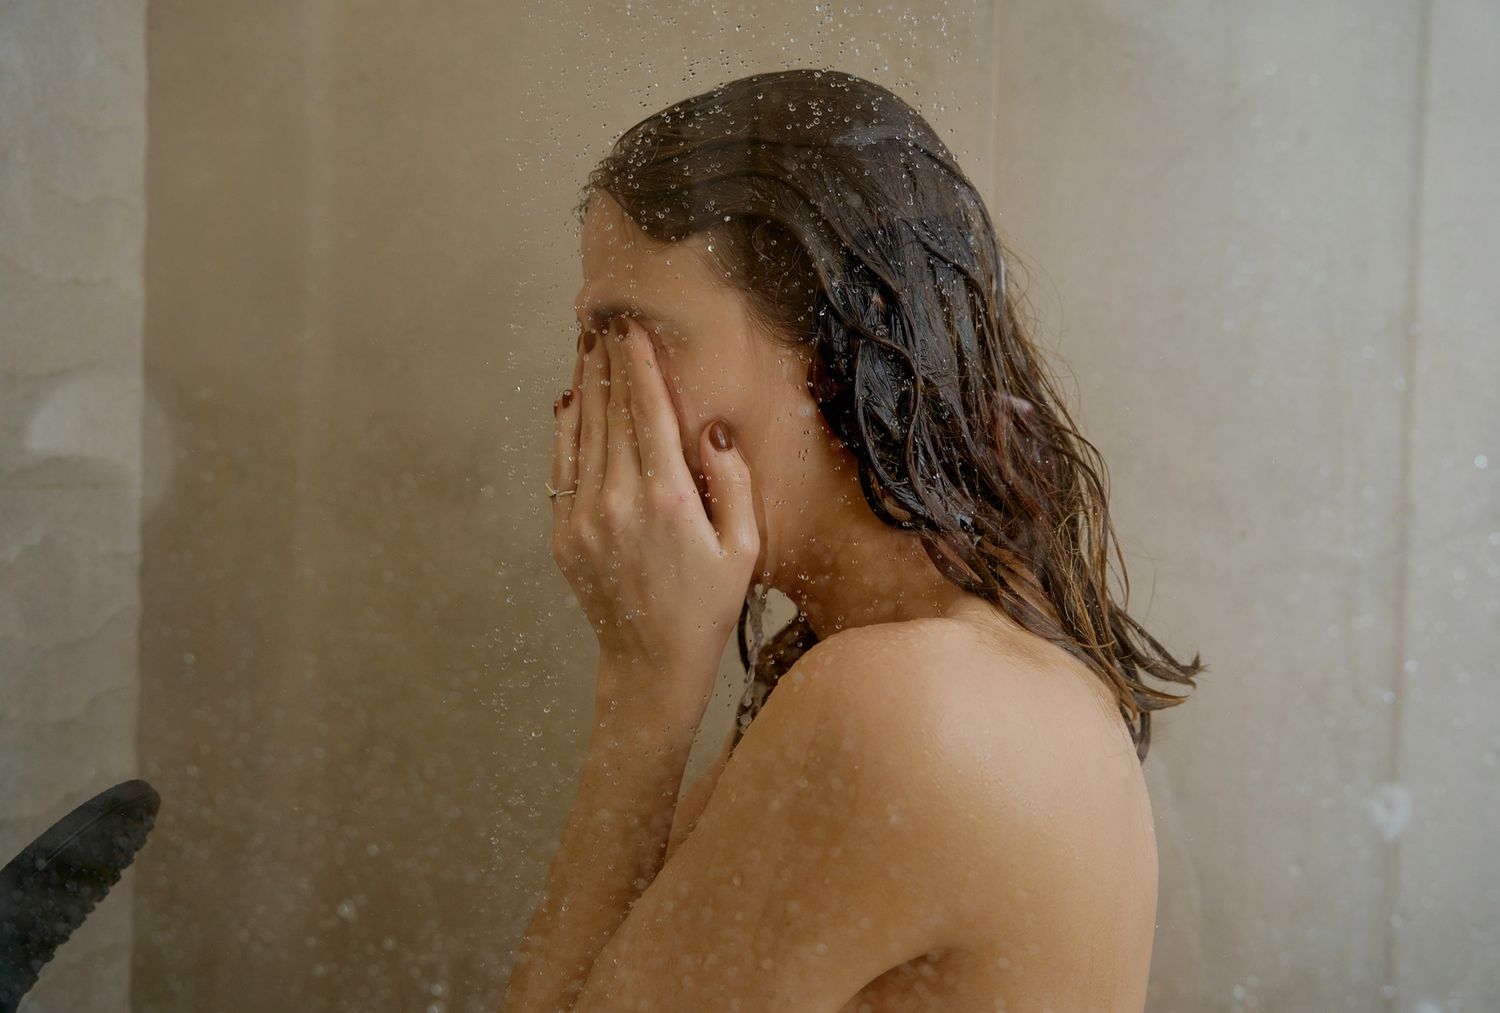 amanda unser share watch girl in shower photos